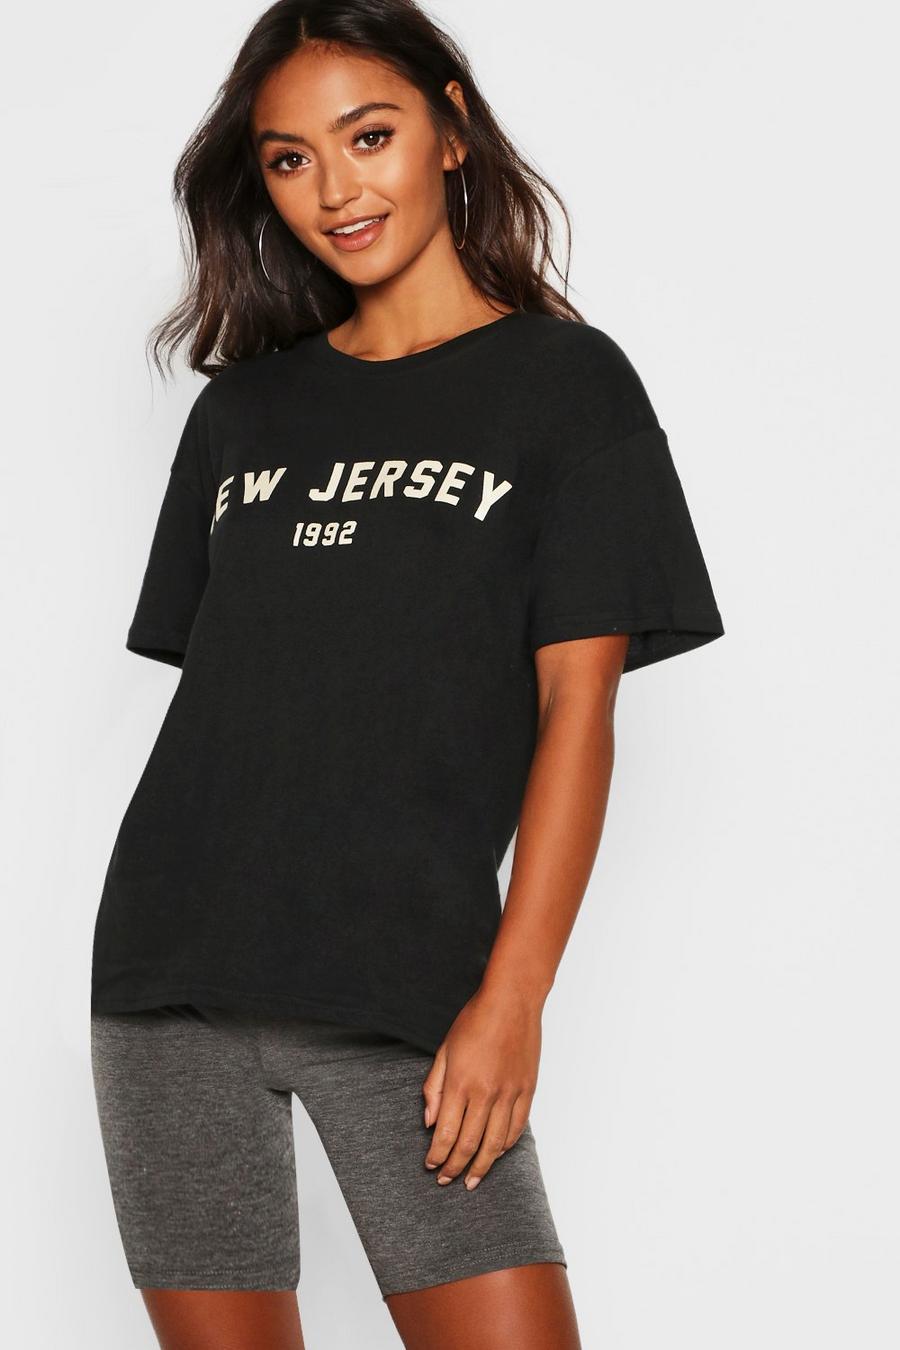 Camiseta con eslogan “New Jersey” Petite image number 1